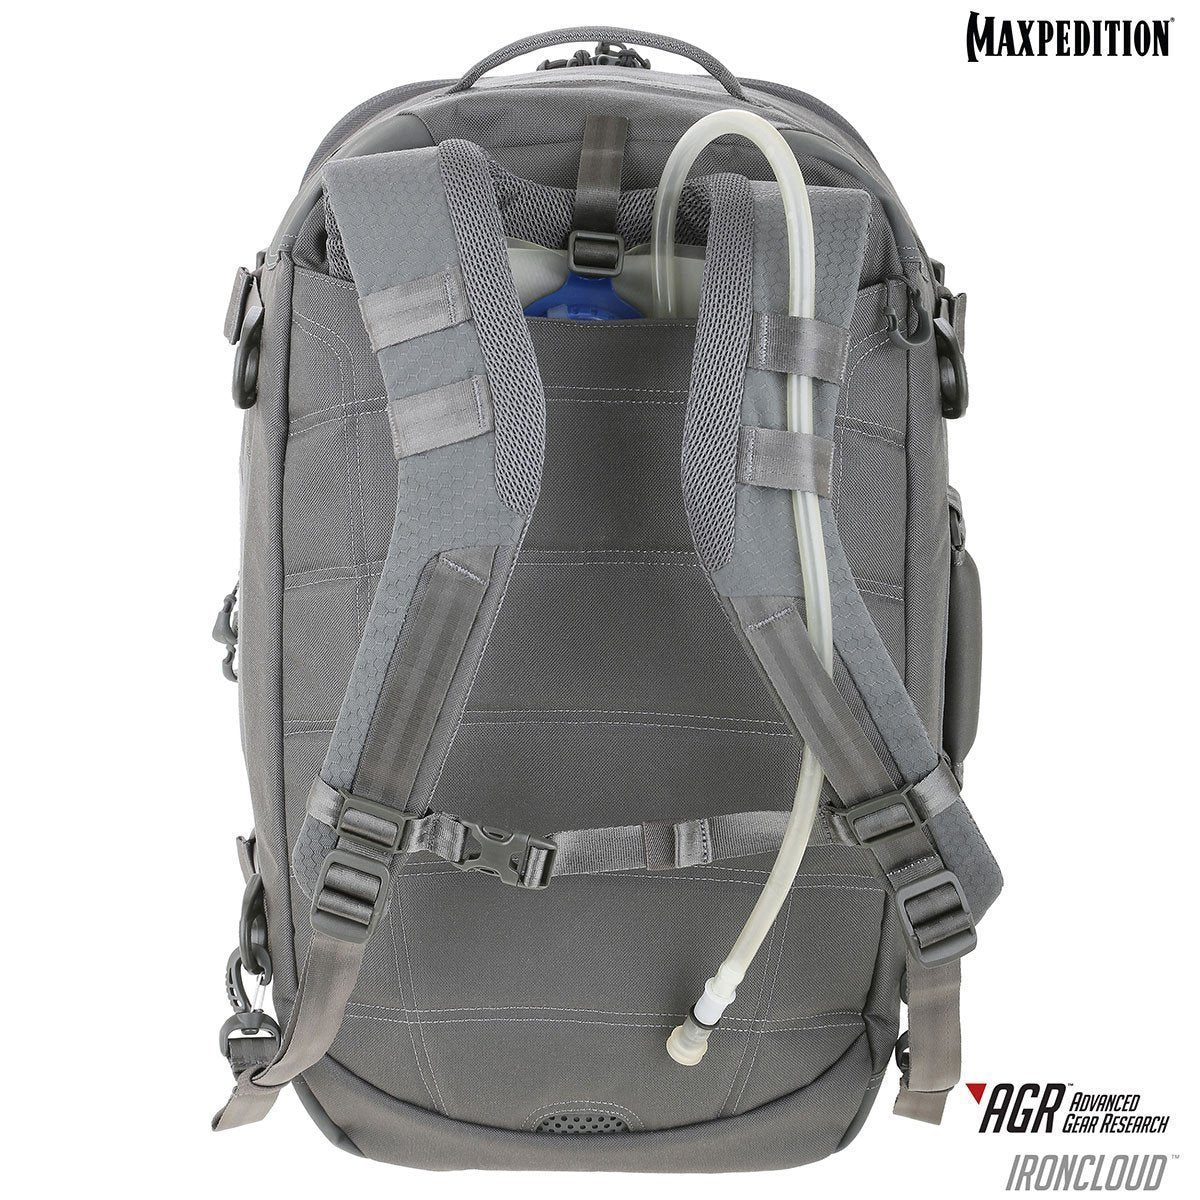 Ironcloud™ Adventure Travel Bag | Maxpedition  Tactical Gear